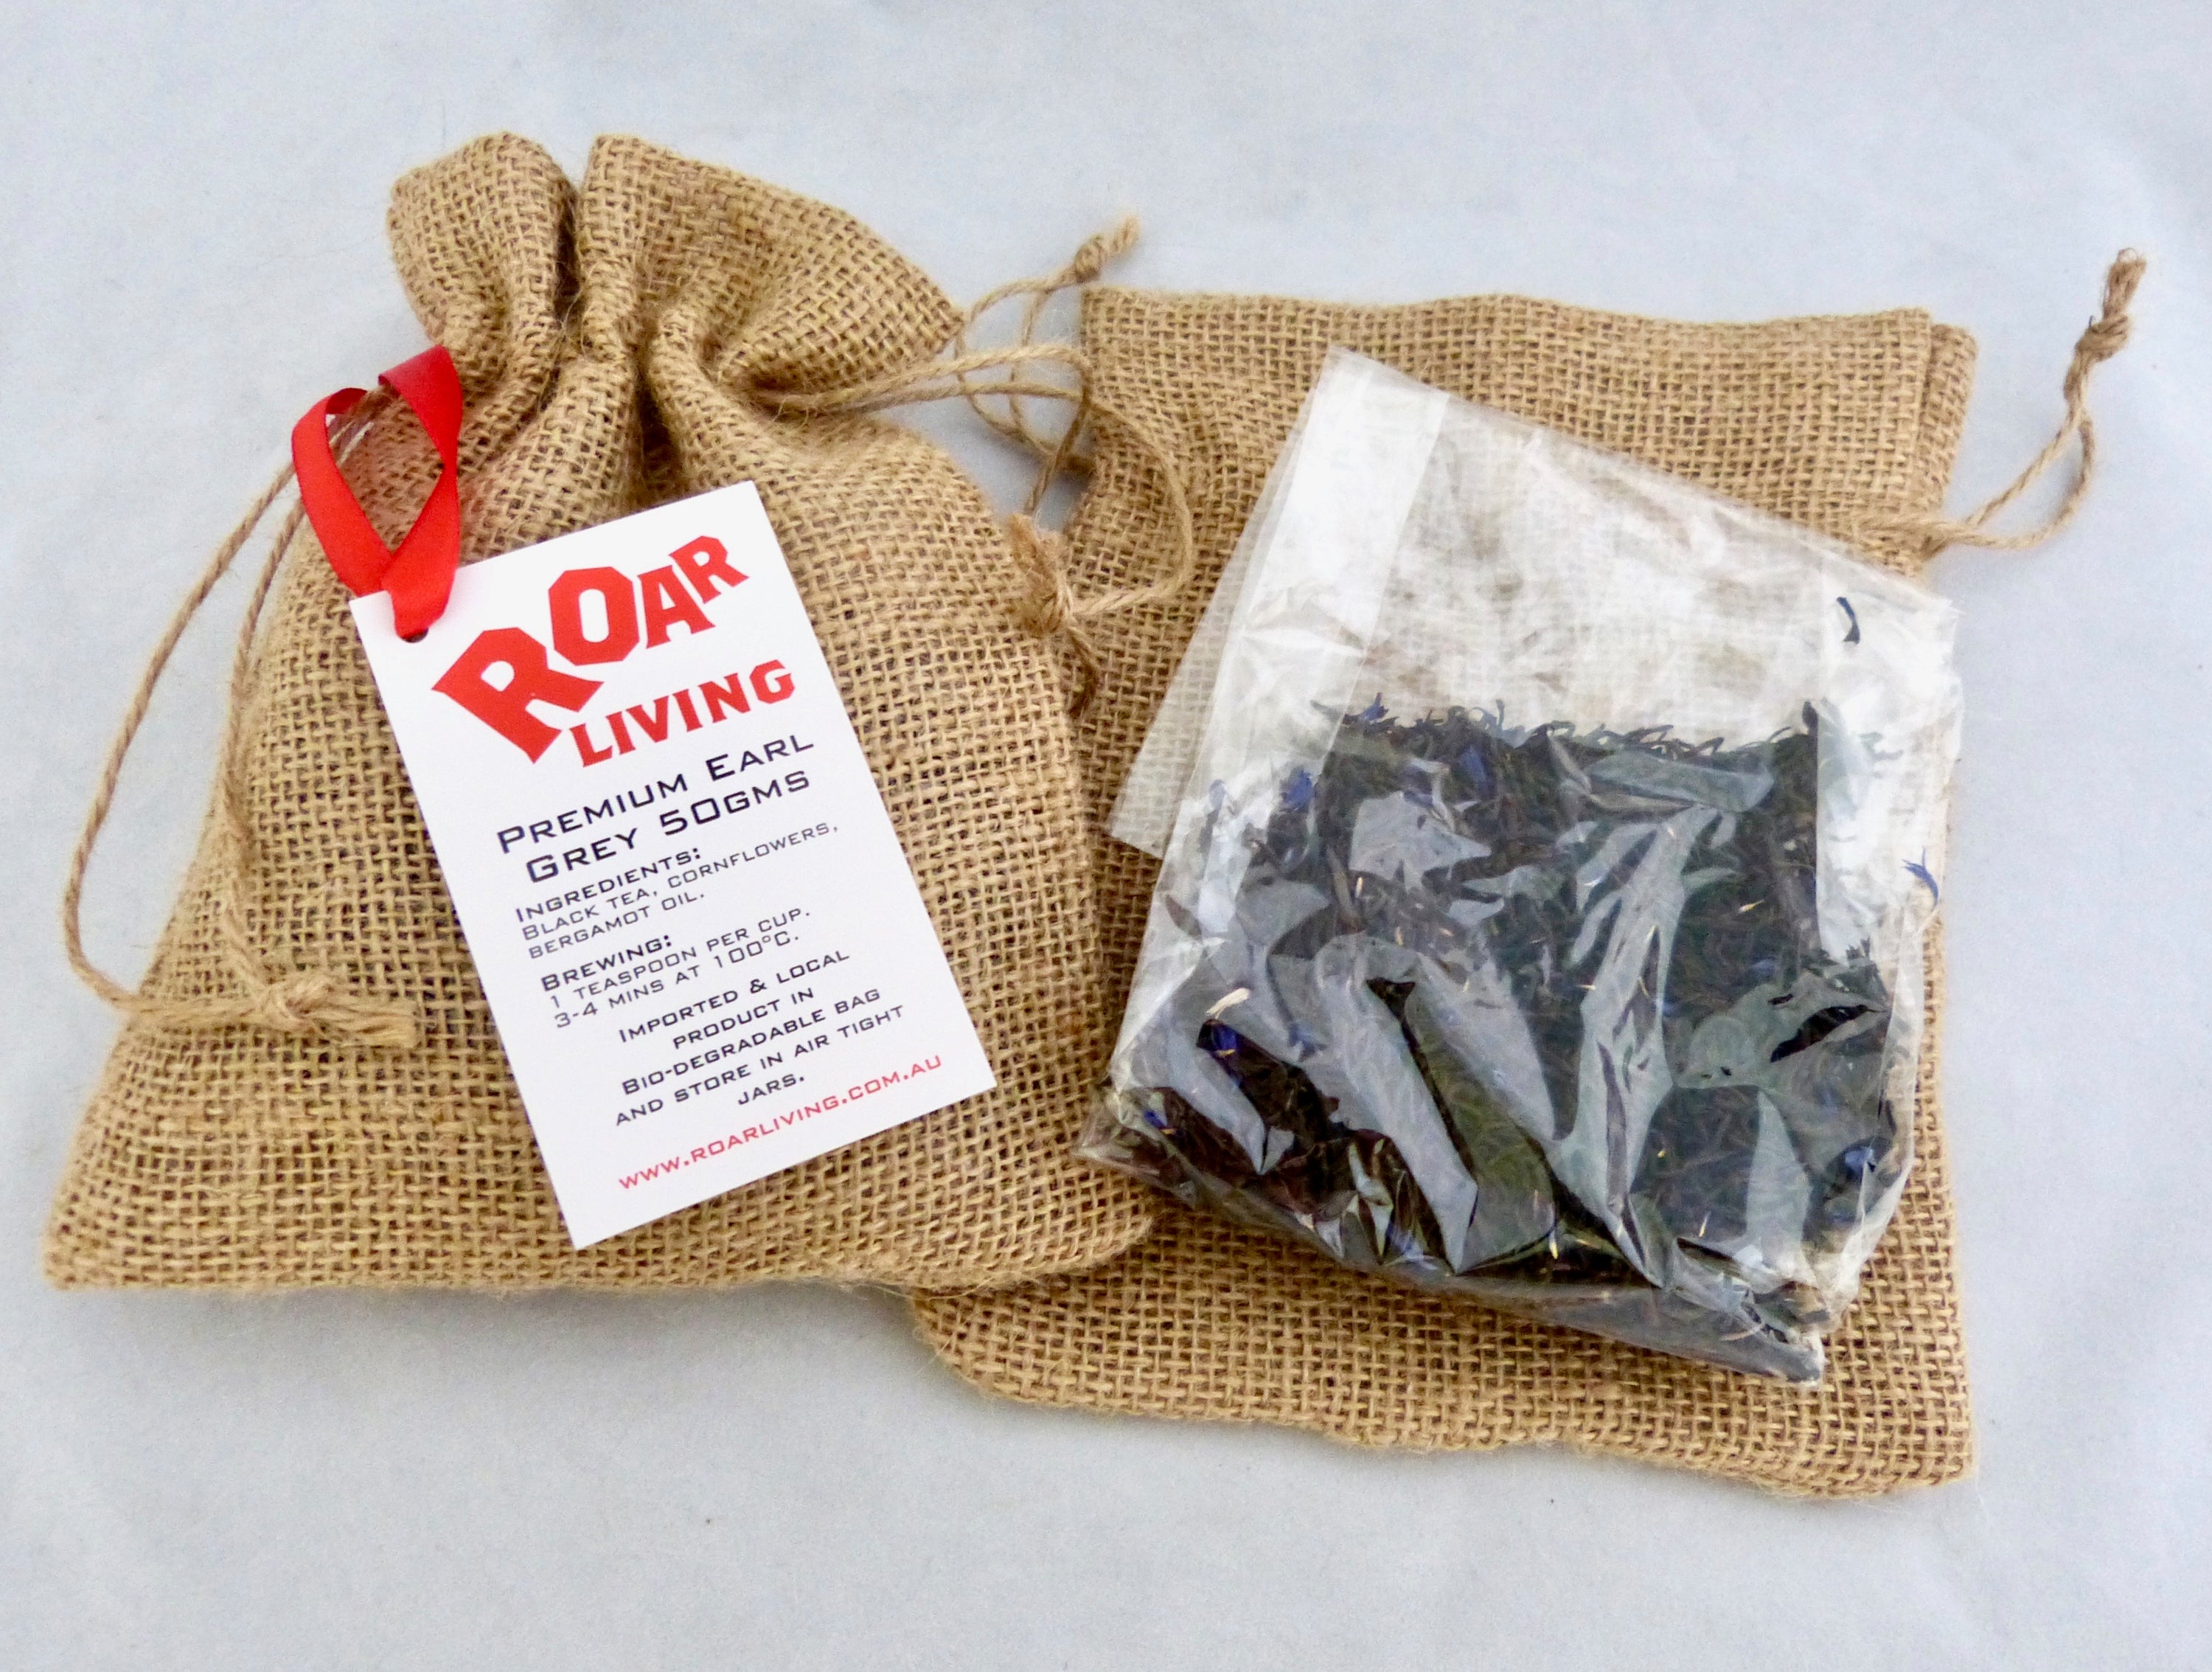 Earl grey. Earl grey tea leaves. premium tea leaves. Iced tea recipe. compostable bag. Hassian bag